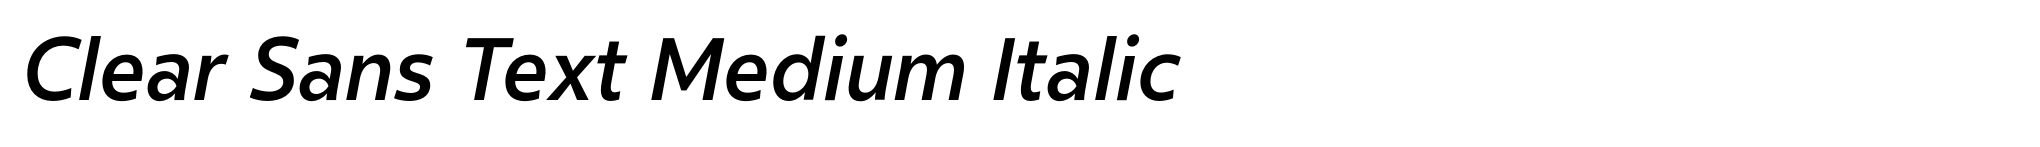 Clear Sans Text Medium Italic image